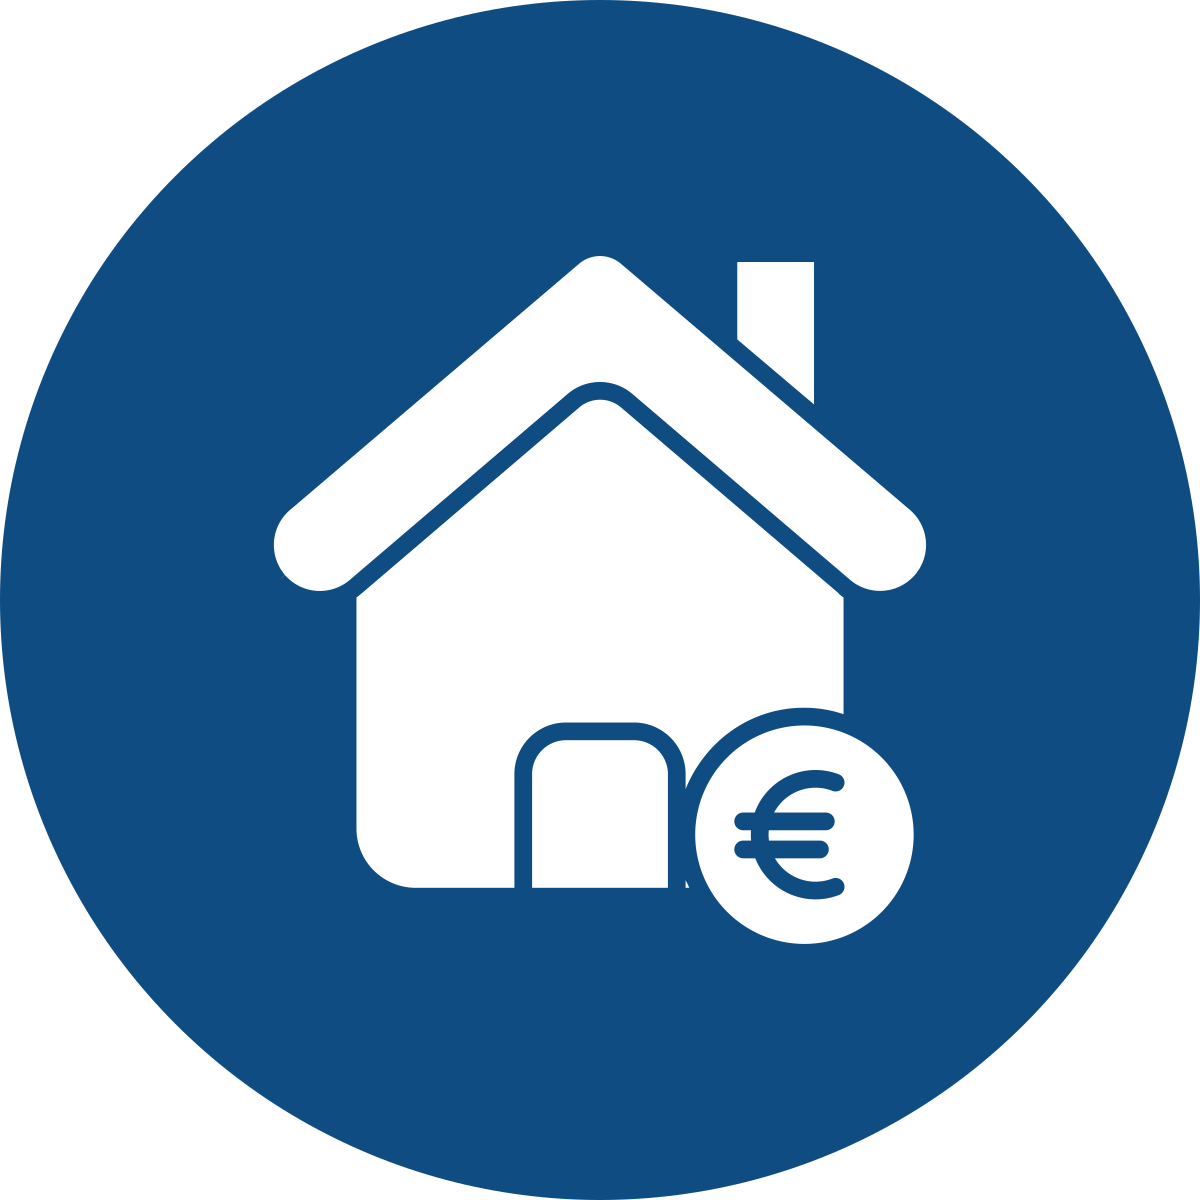 Budget, maison, picto euro, isolation